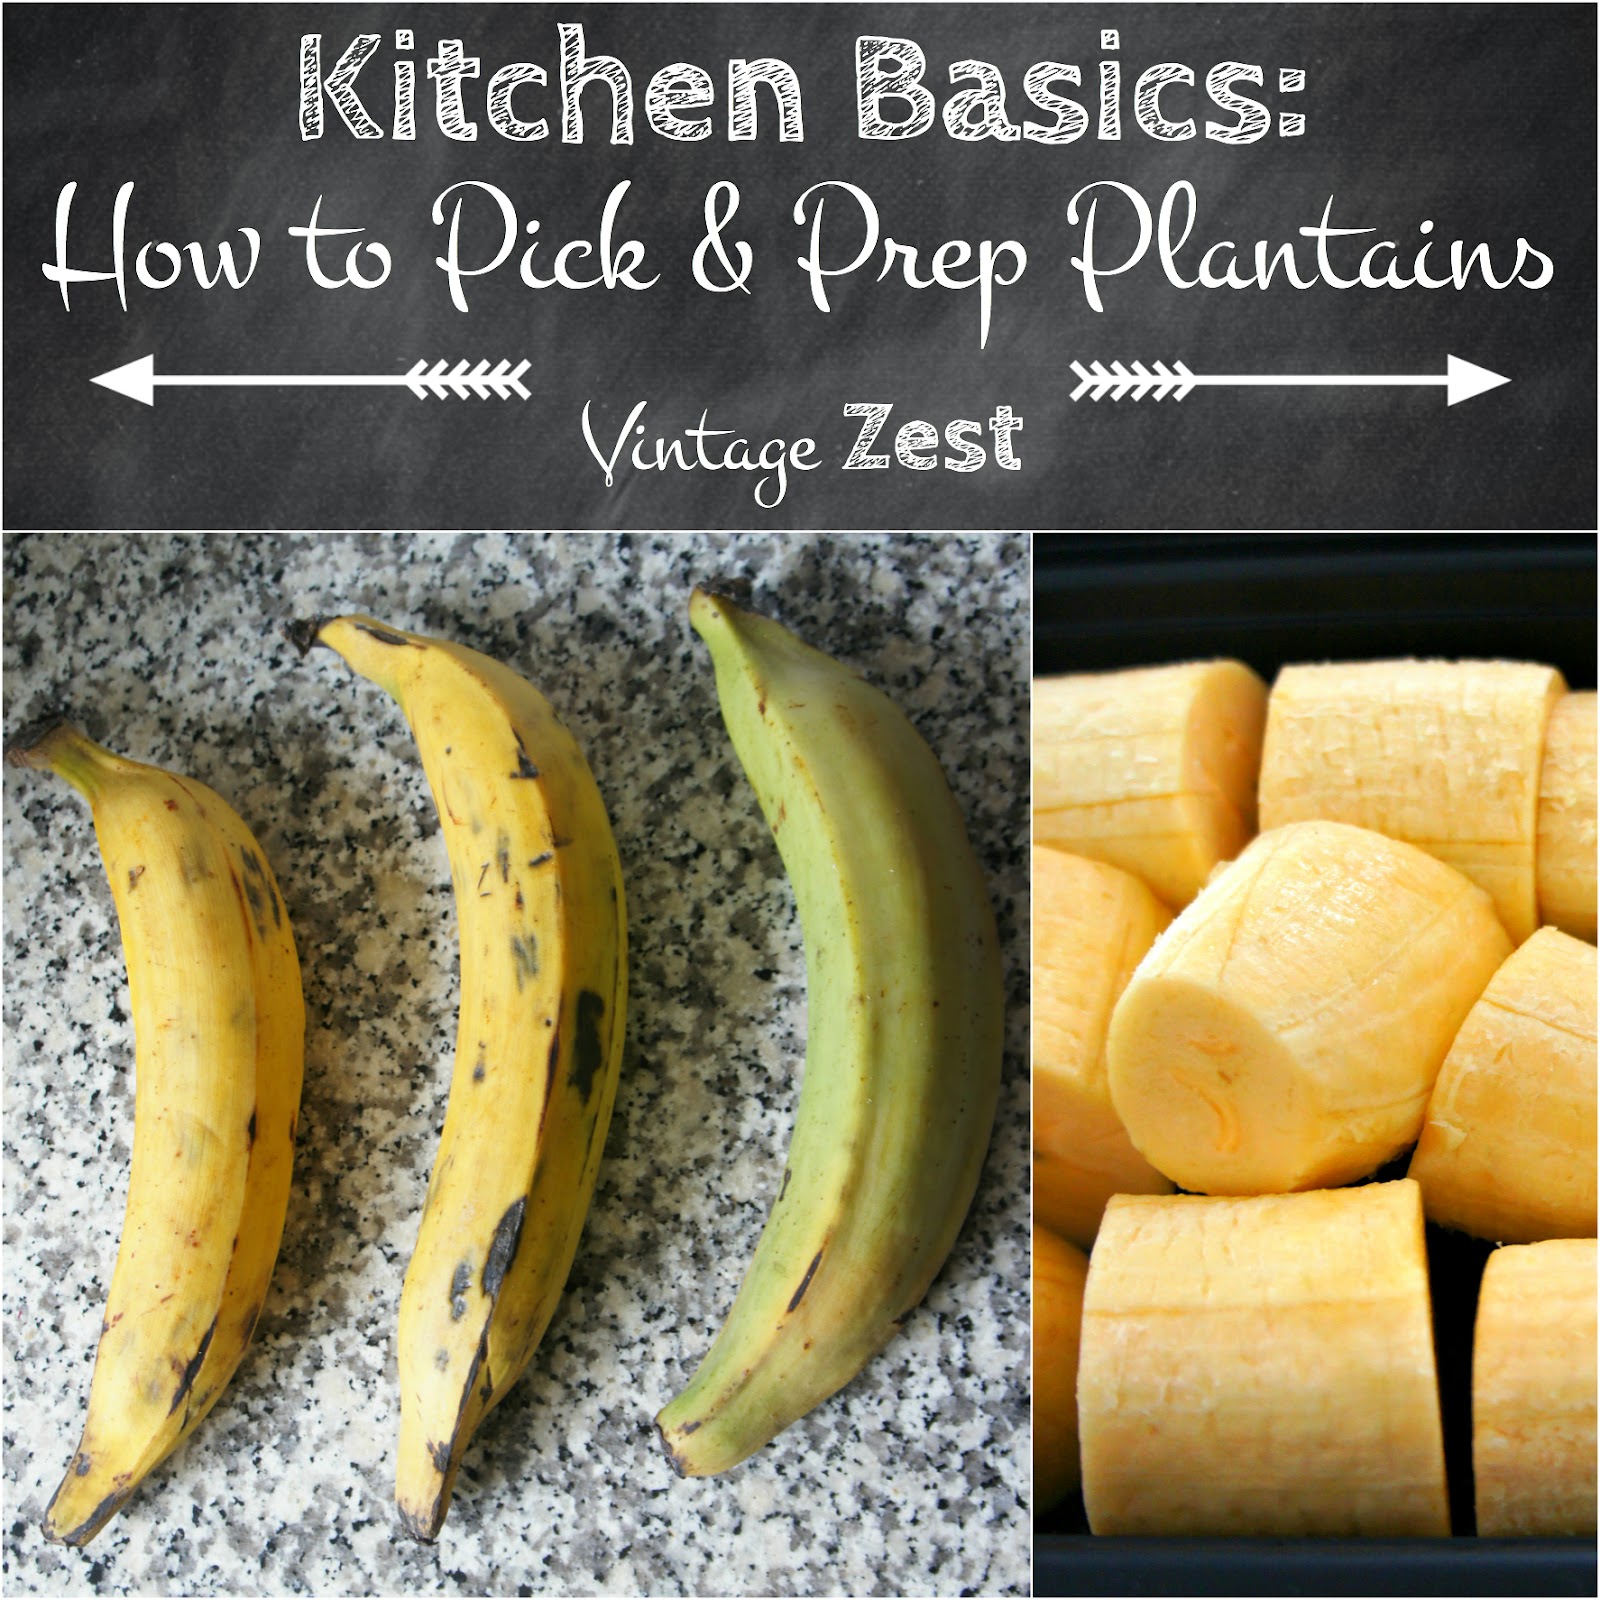 Kitchen Basics: How to Pick & Prep Plantains on Diane's Vintage Zest! #cooking #tip